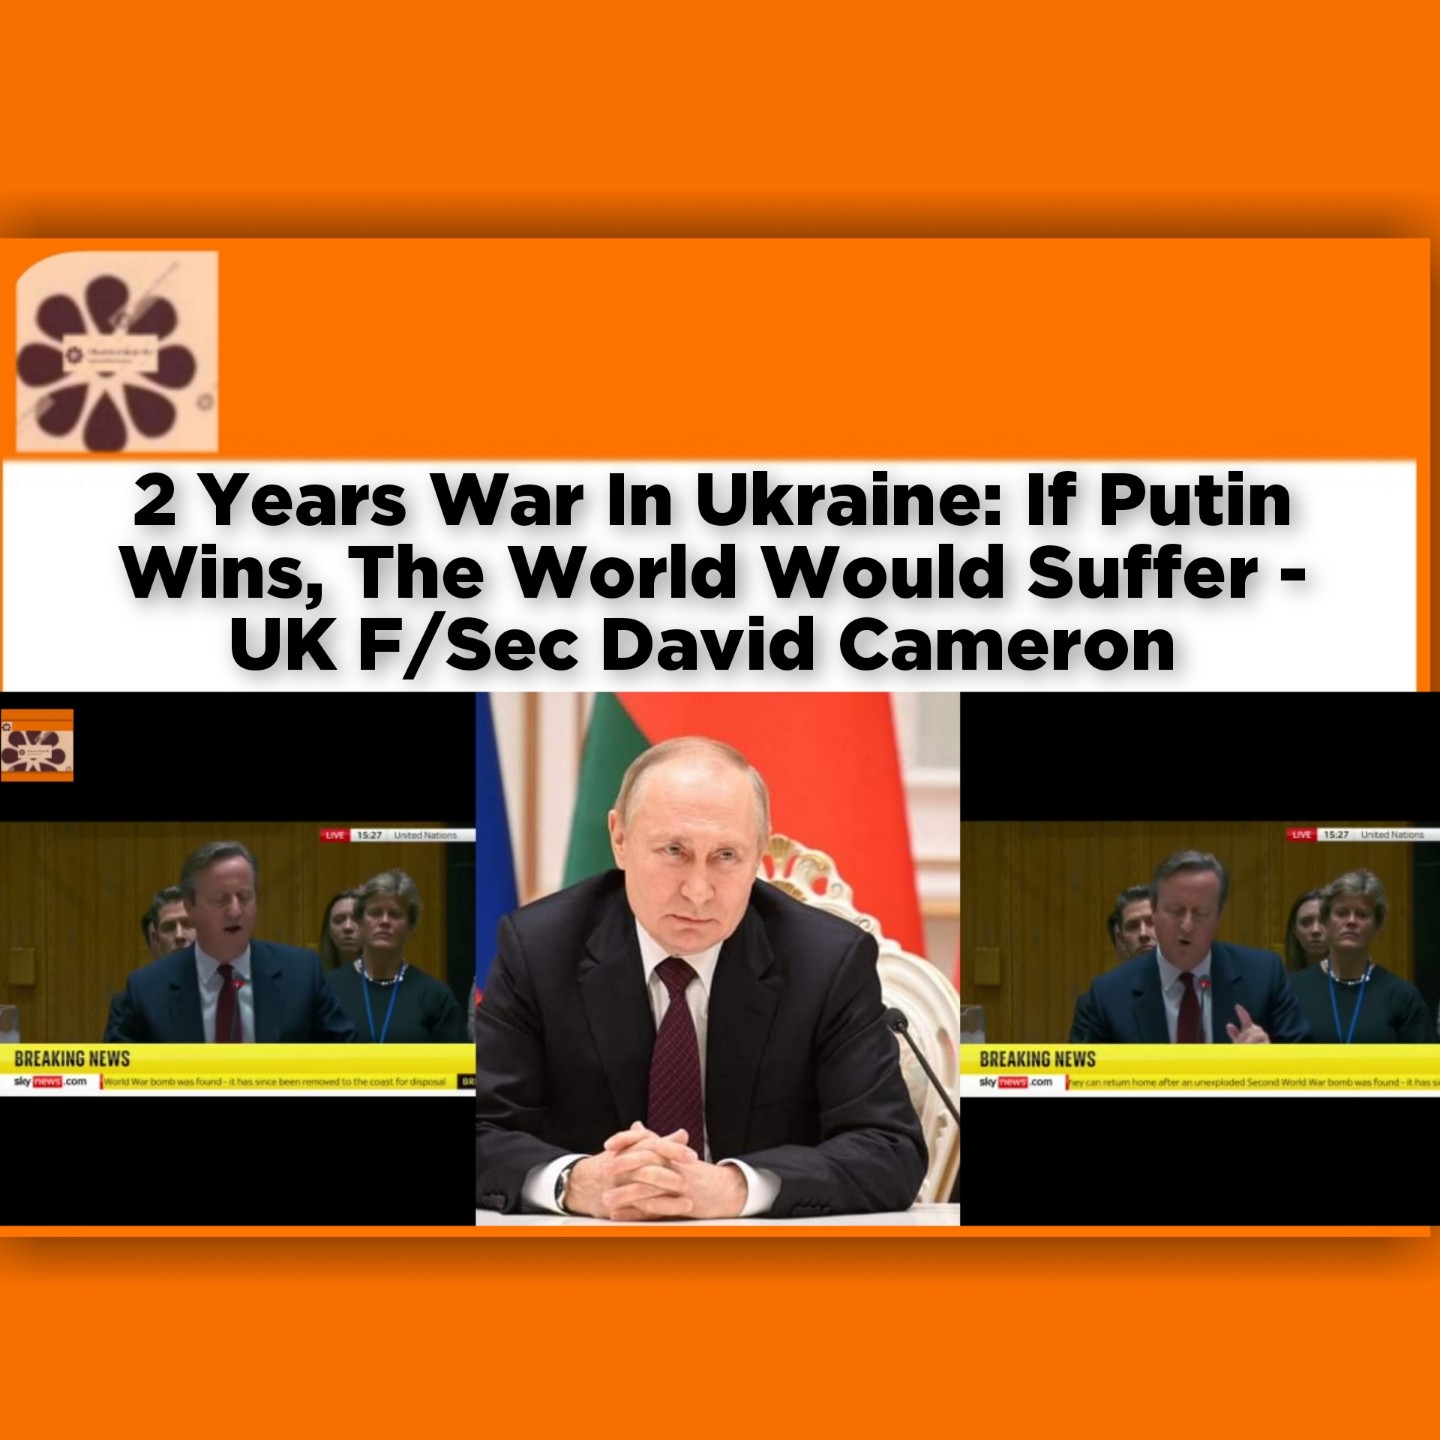 2 Years War In Ukraine: If Putin Wins, The World Would Suffer - UK F/Sec David Cameron ~ OsazuwaAkonedo #Cameron #David #Putin #Russia #UK #Ukraine #UN #Vladimir